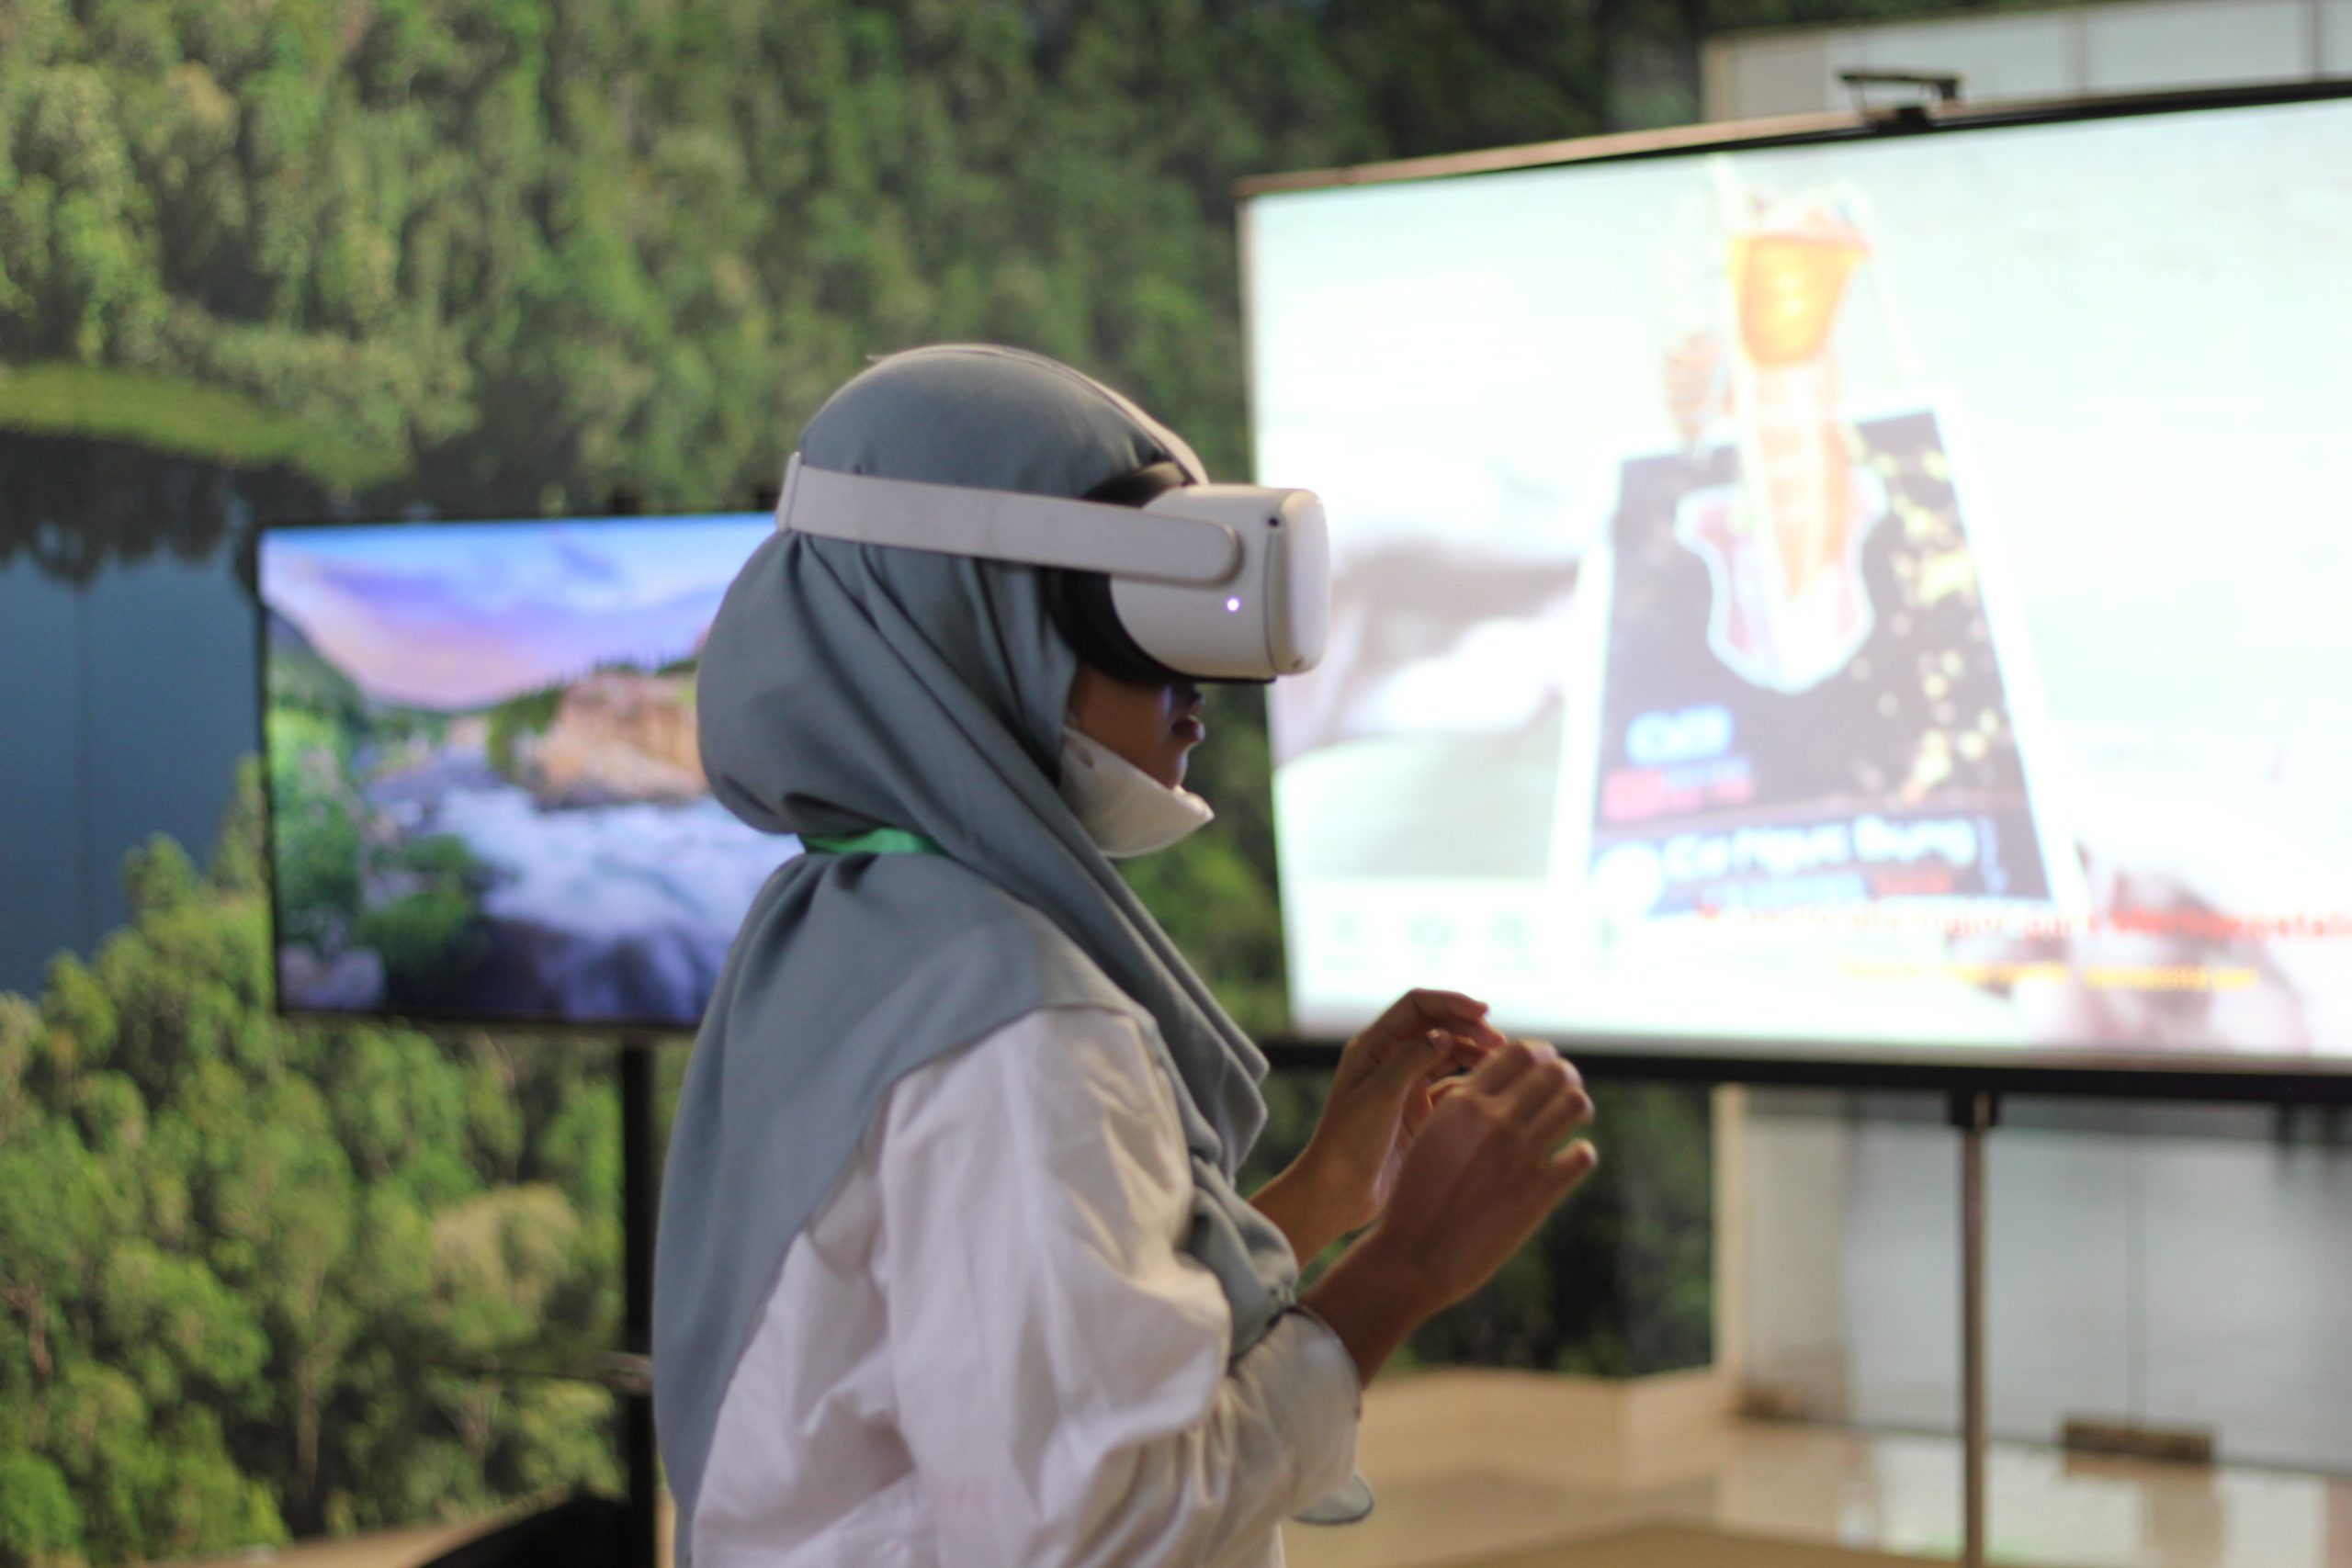 Antusias peserta mencoba Virtual Reality